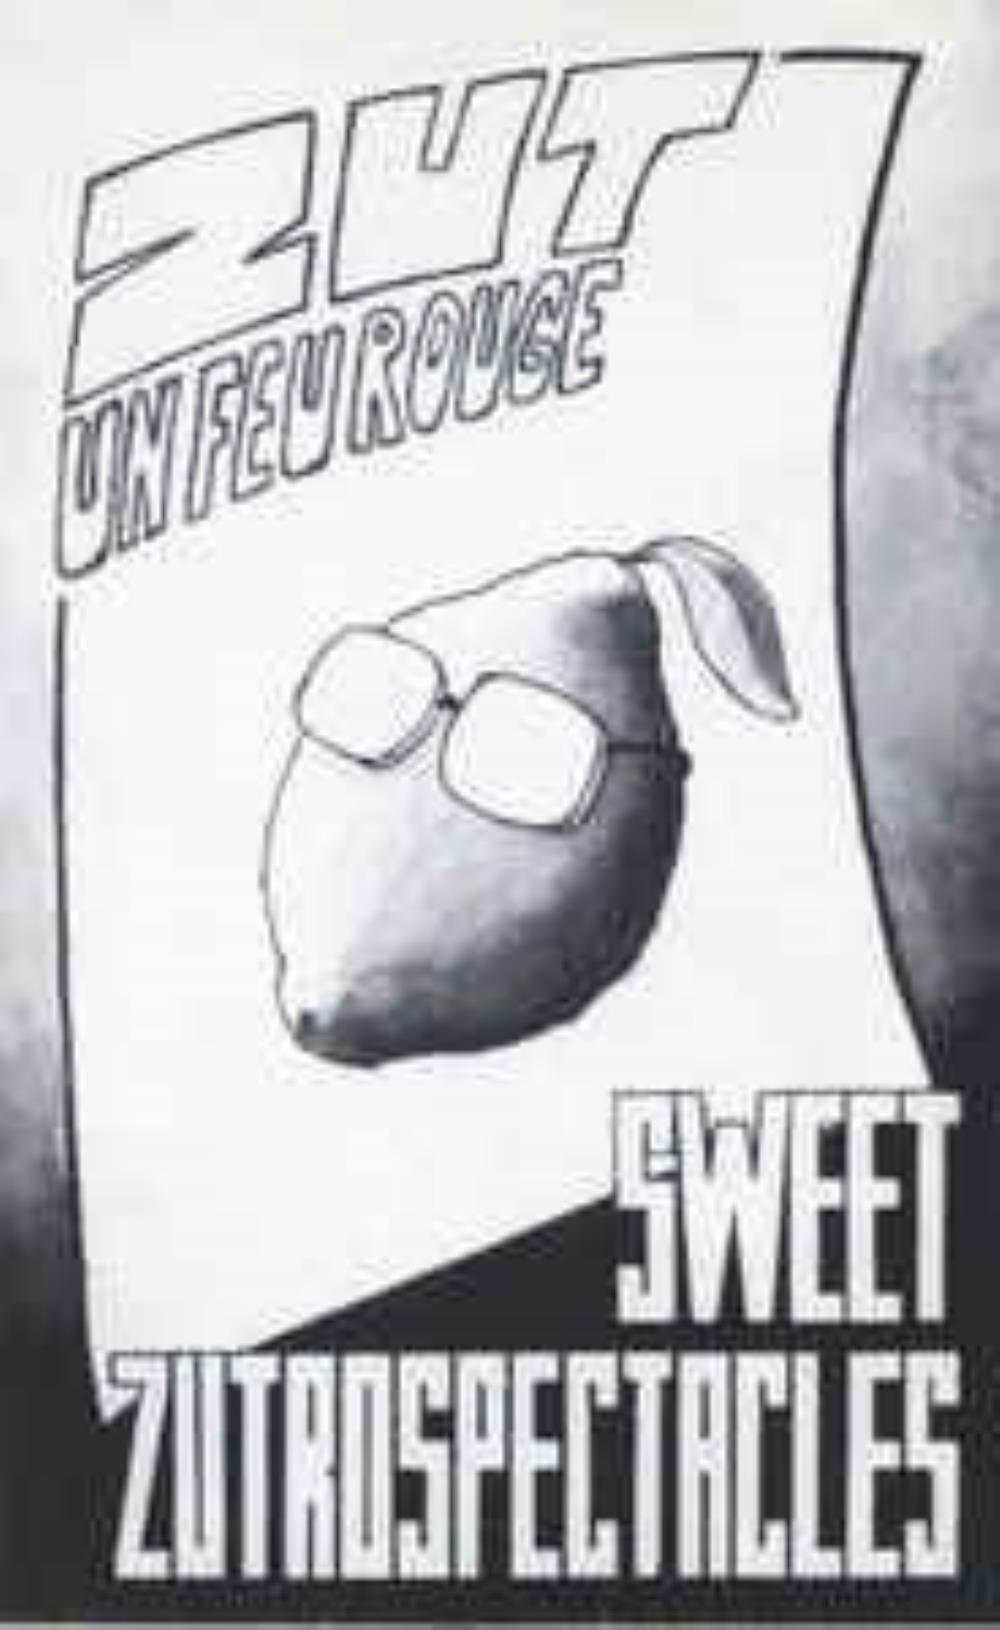 Zut Un Feu Rouge - Sweet Zutrospectacles CD (album) cover